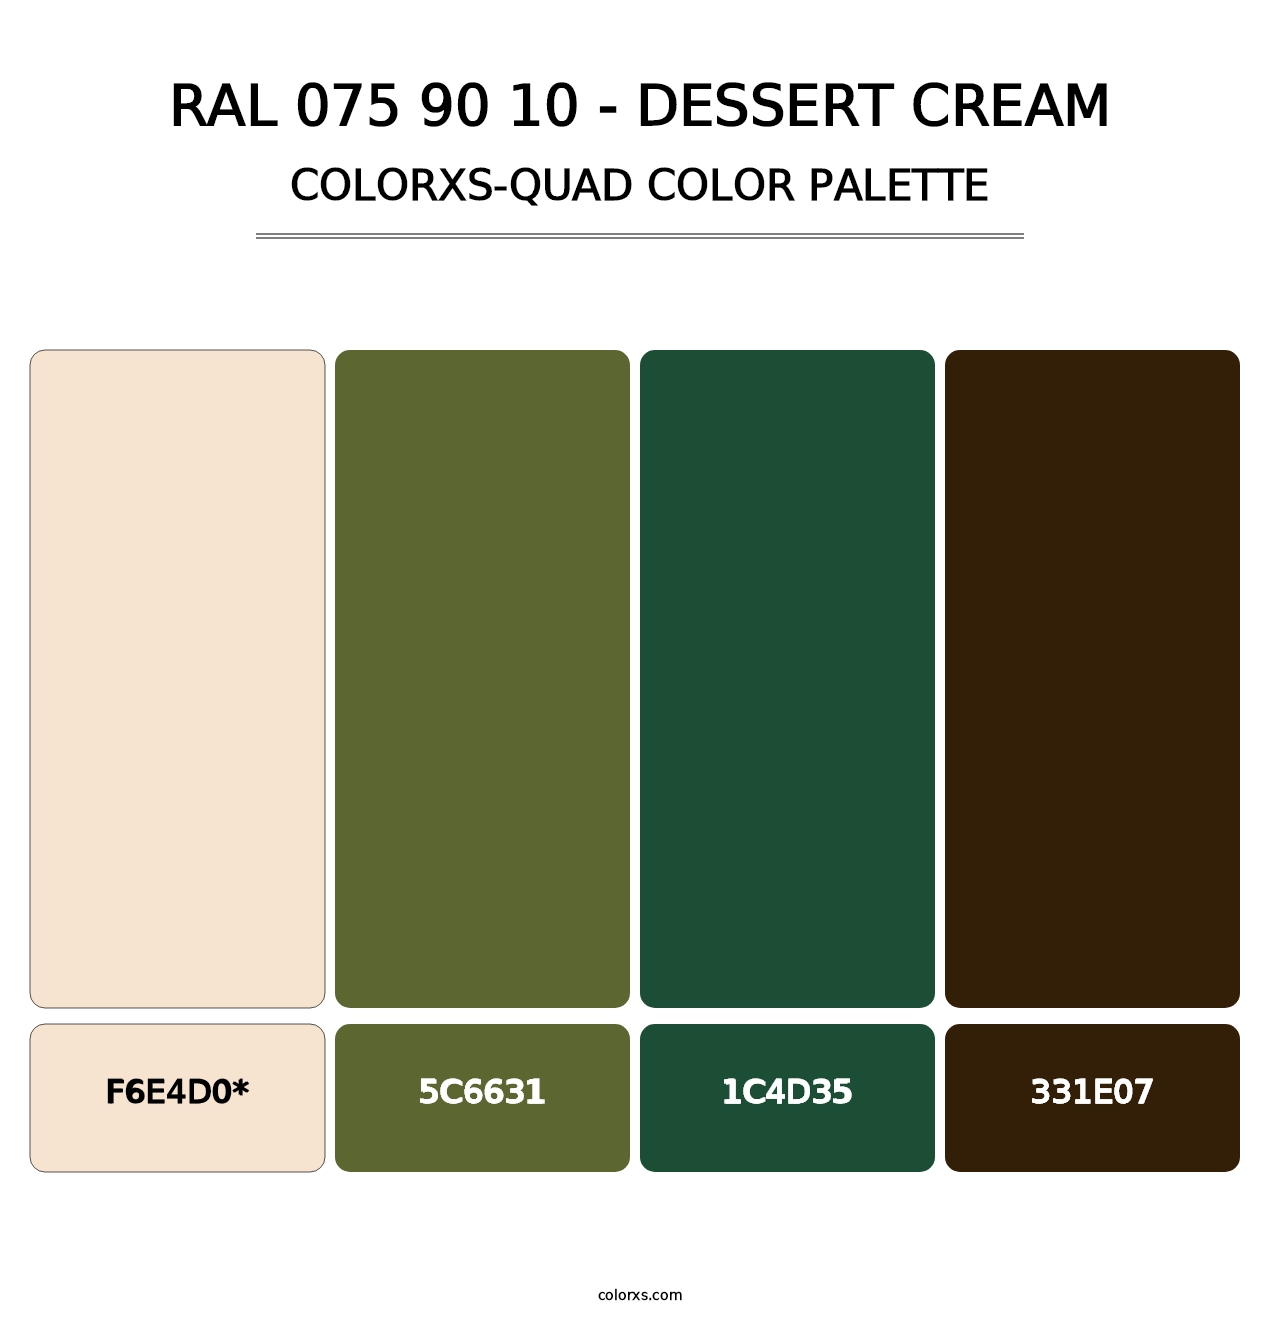 RAL 075 90 10 - Dessert Cream - Colorxs Quad Palette